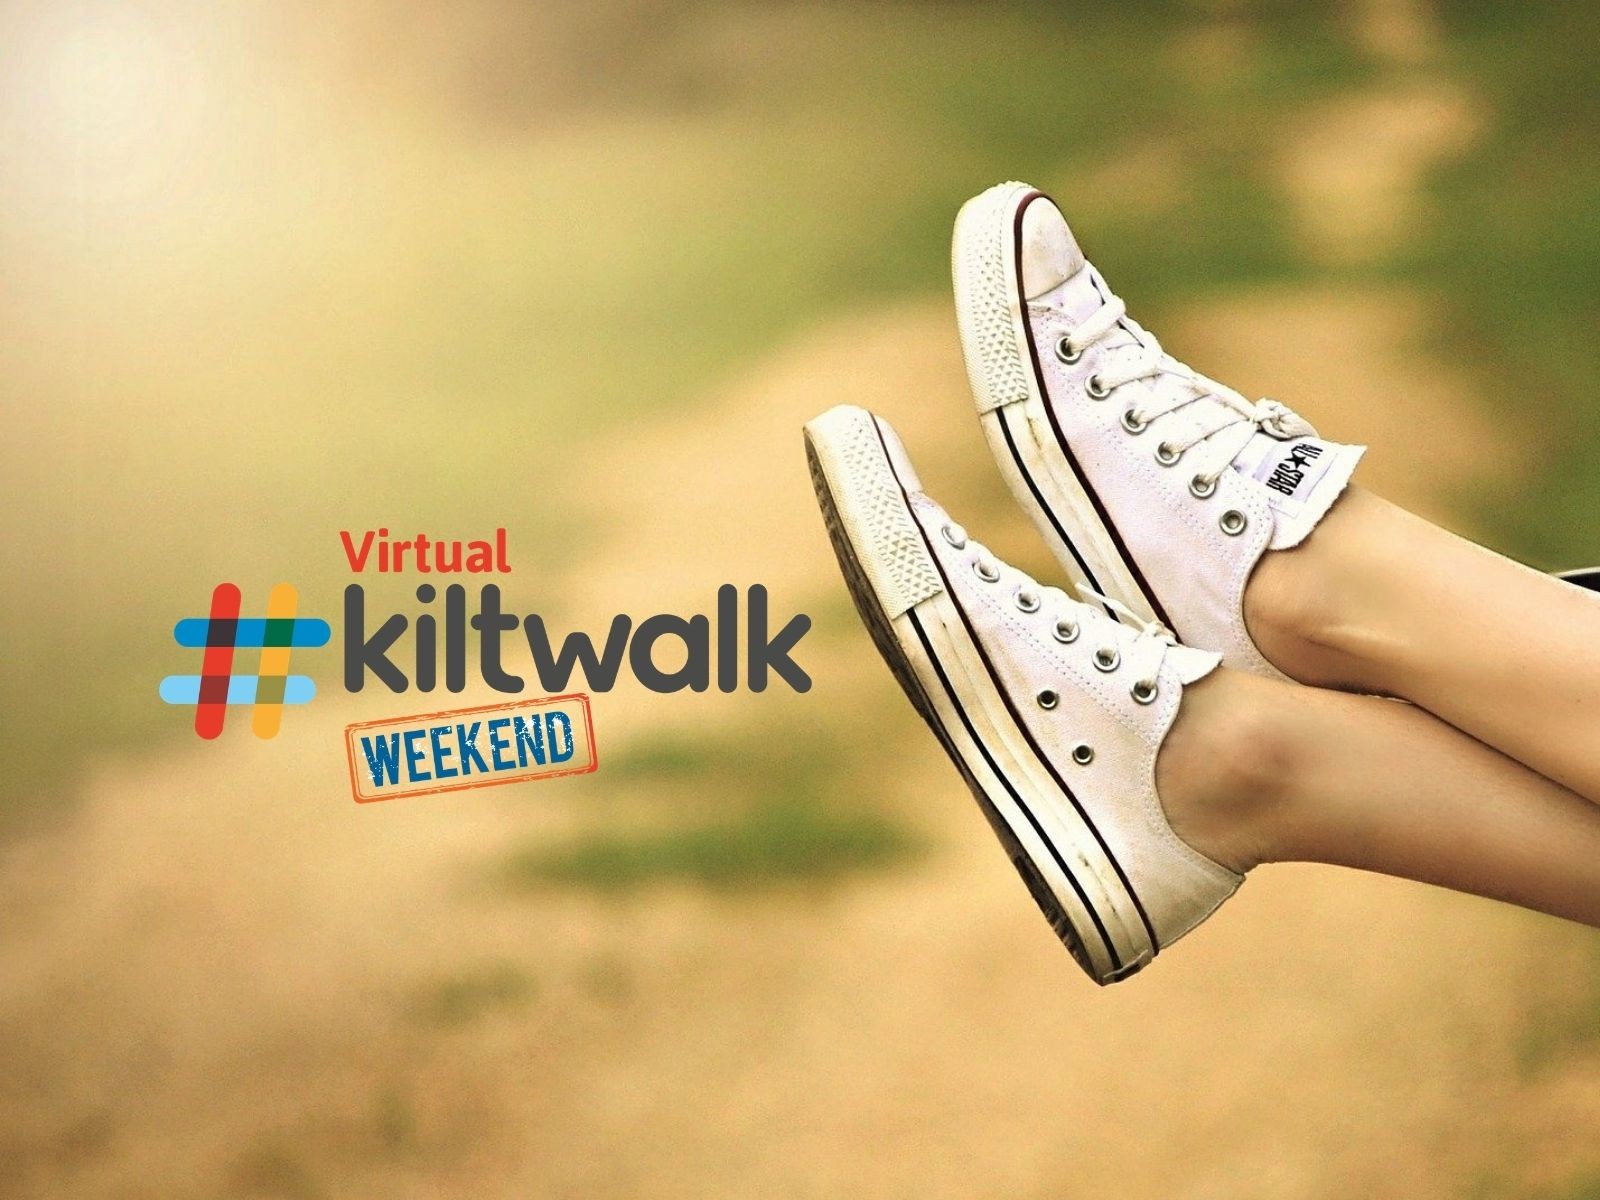  » Virtual Kiltwalk Weekend set for 23-25 April 2021